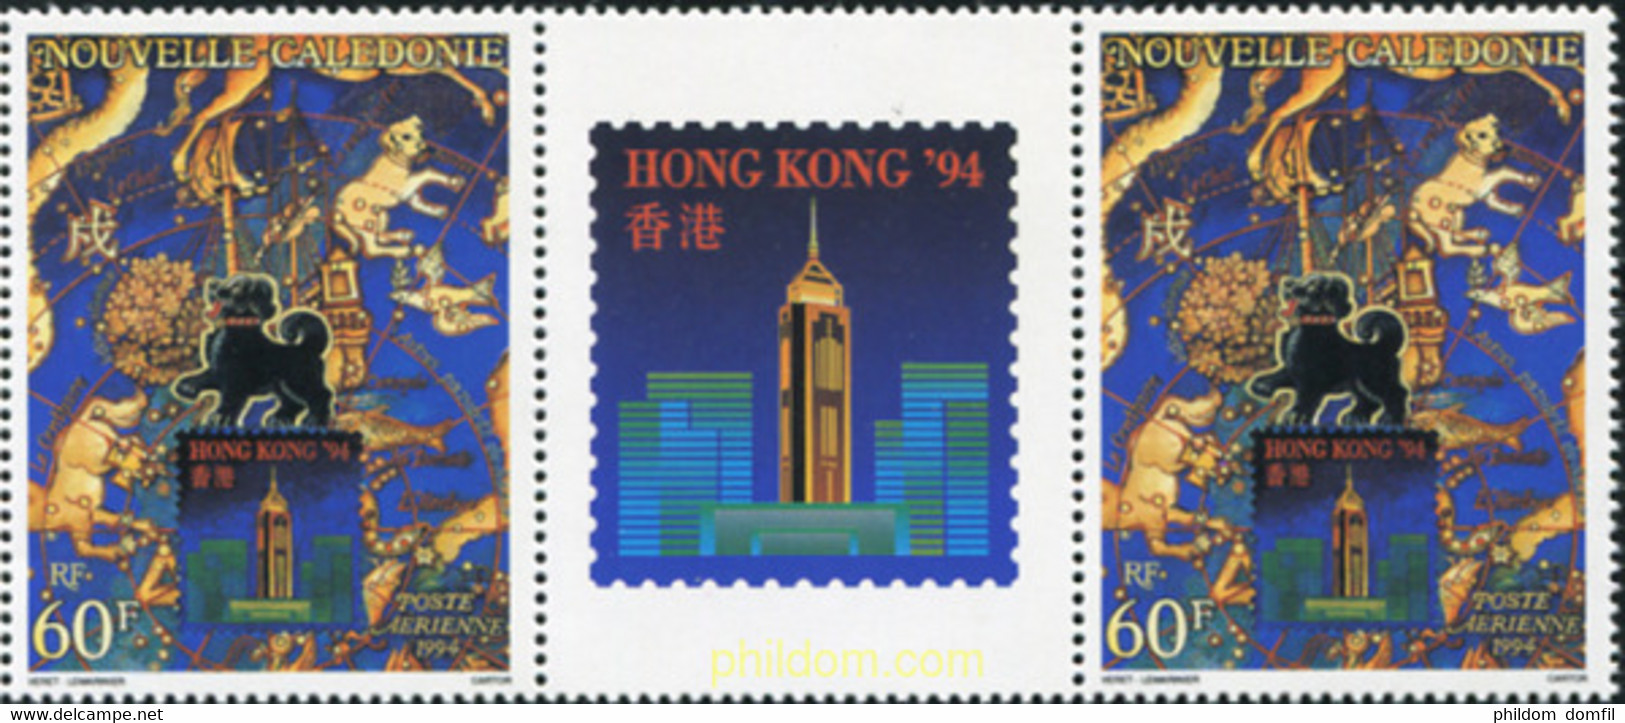 678616 MNH NUEVA CALEDONIA 1994 HONG KONG 94. EXPOSICION FILATELICA INTERNACIONAL - Used Stamps